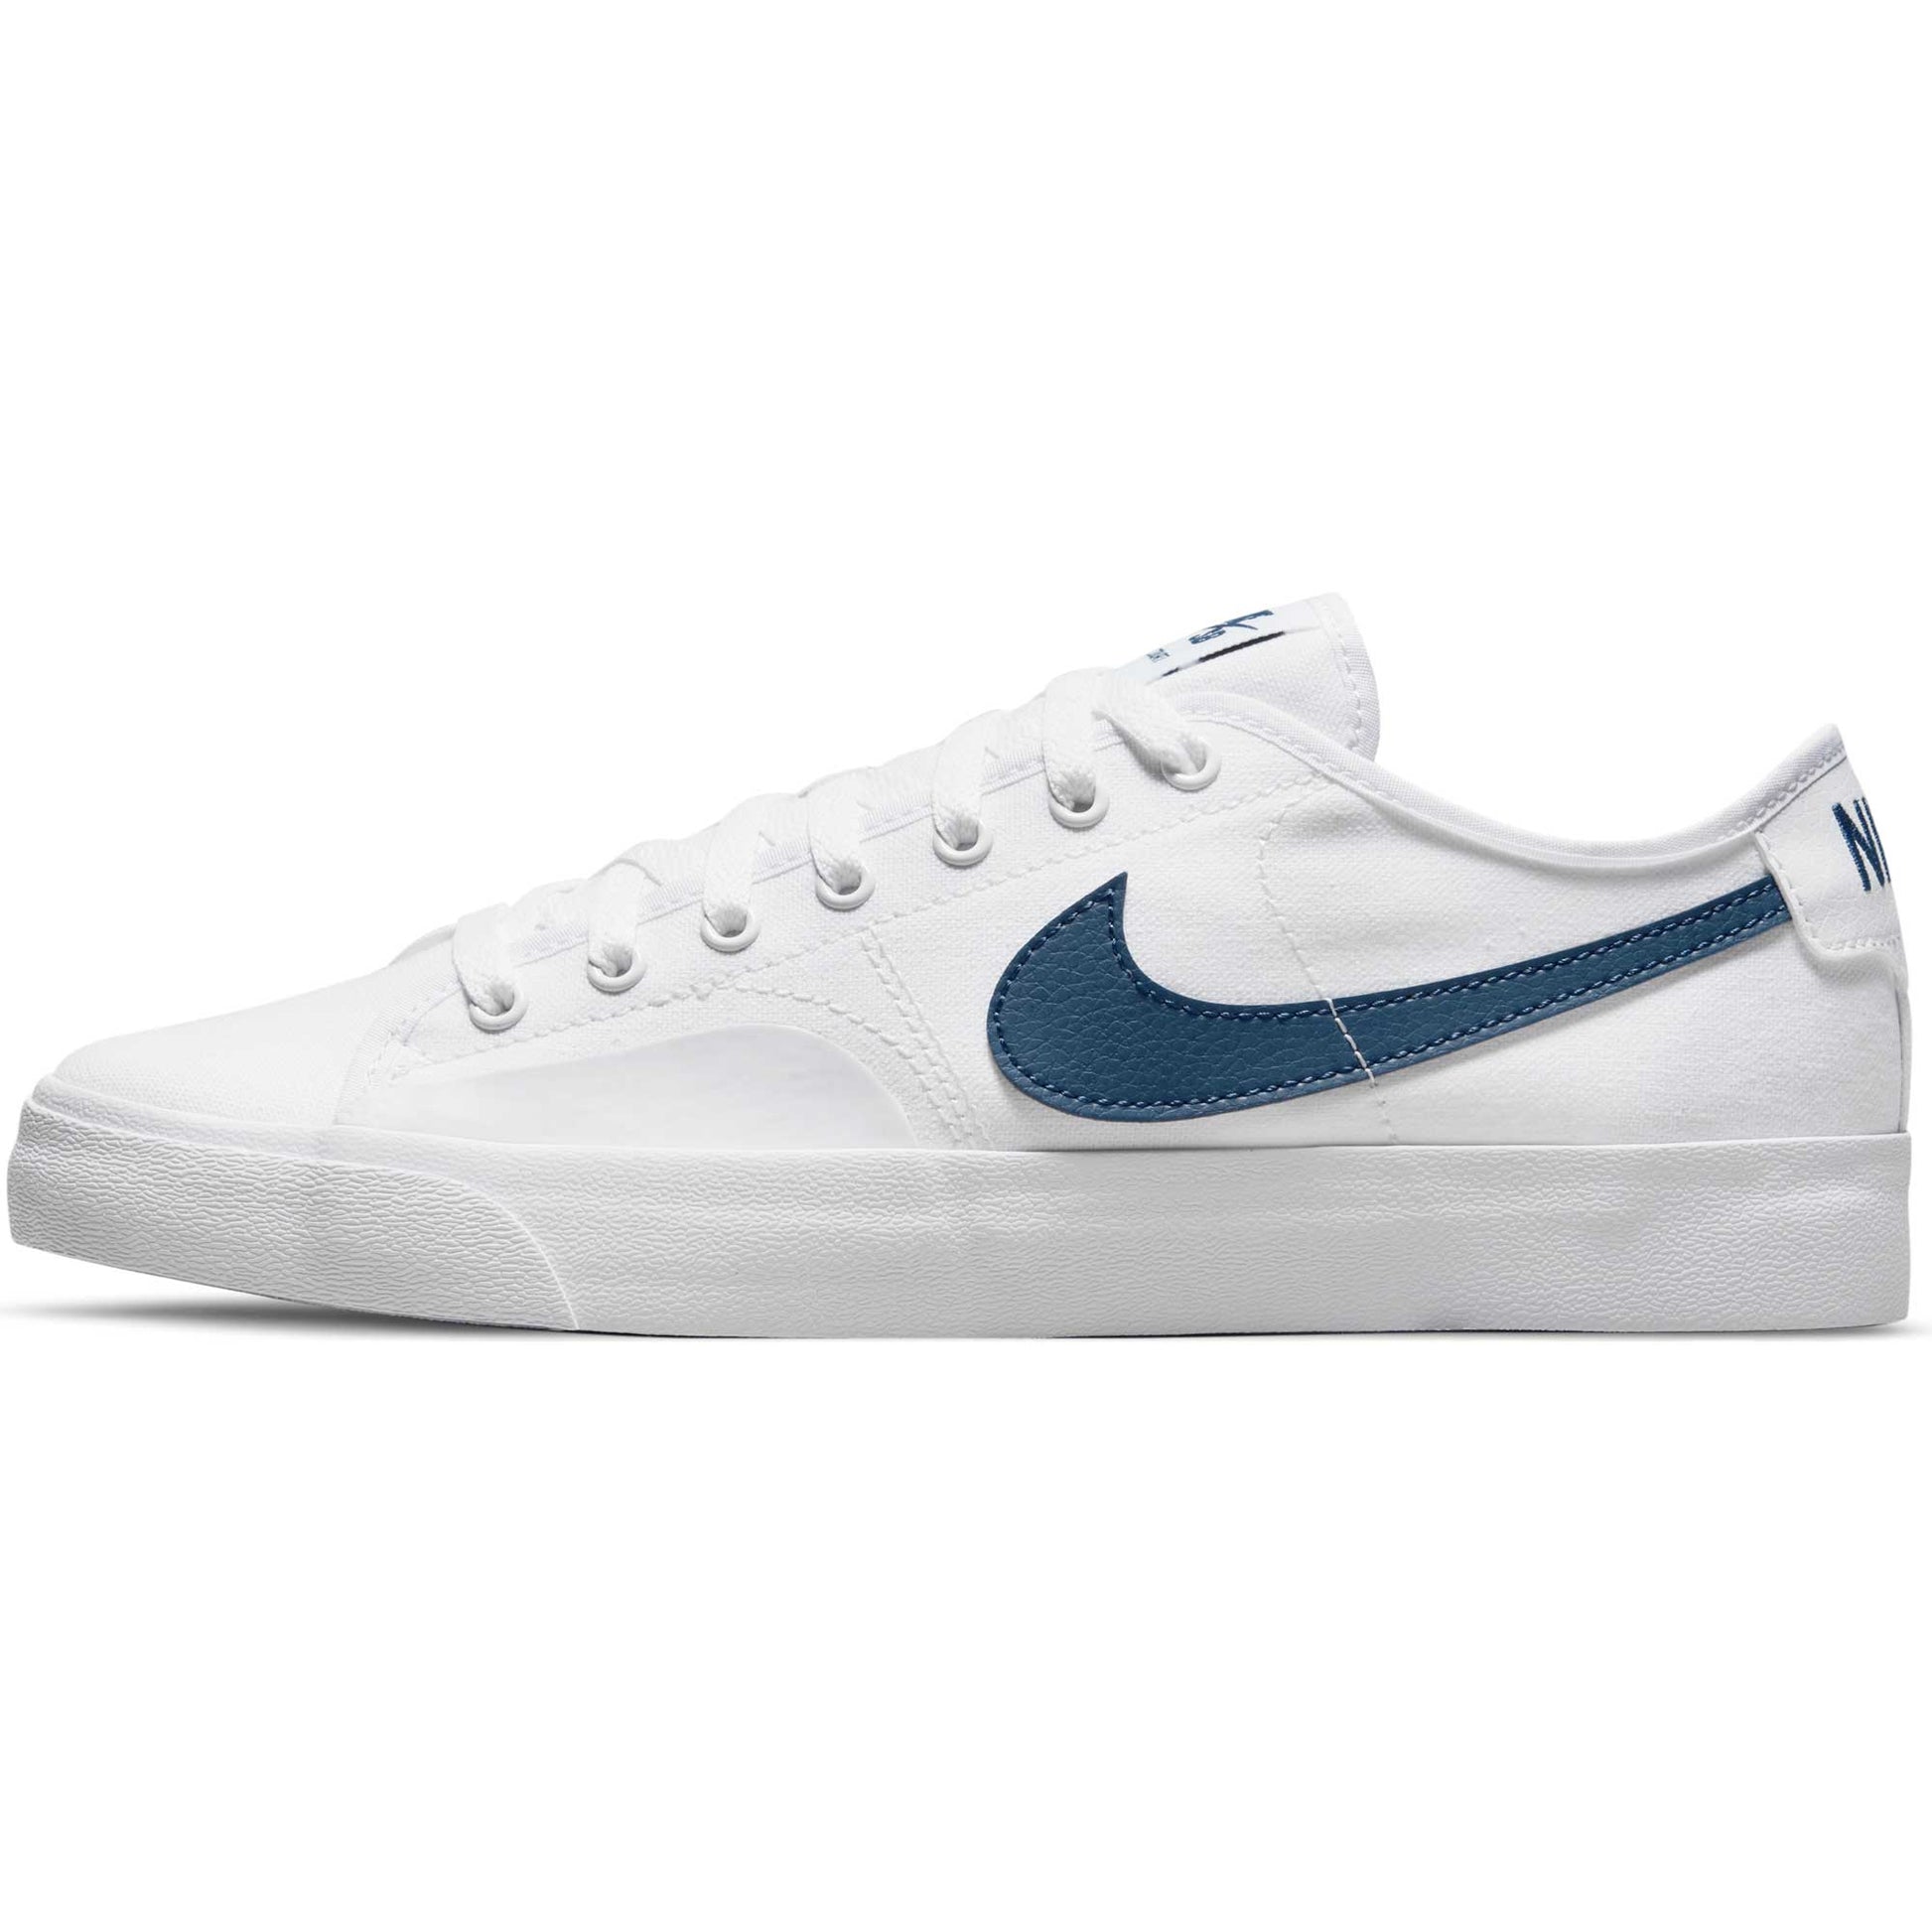 Nike SB BLZR Court, white/court blue-white-white - Tiki Room Skateboards - 5